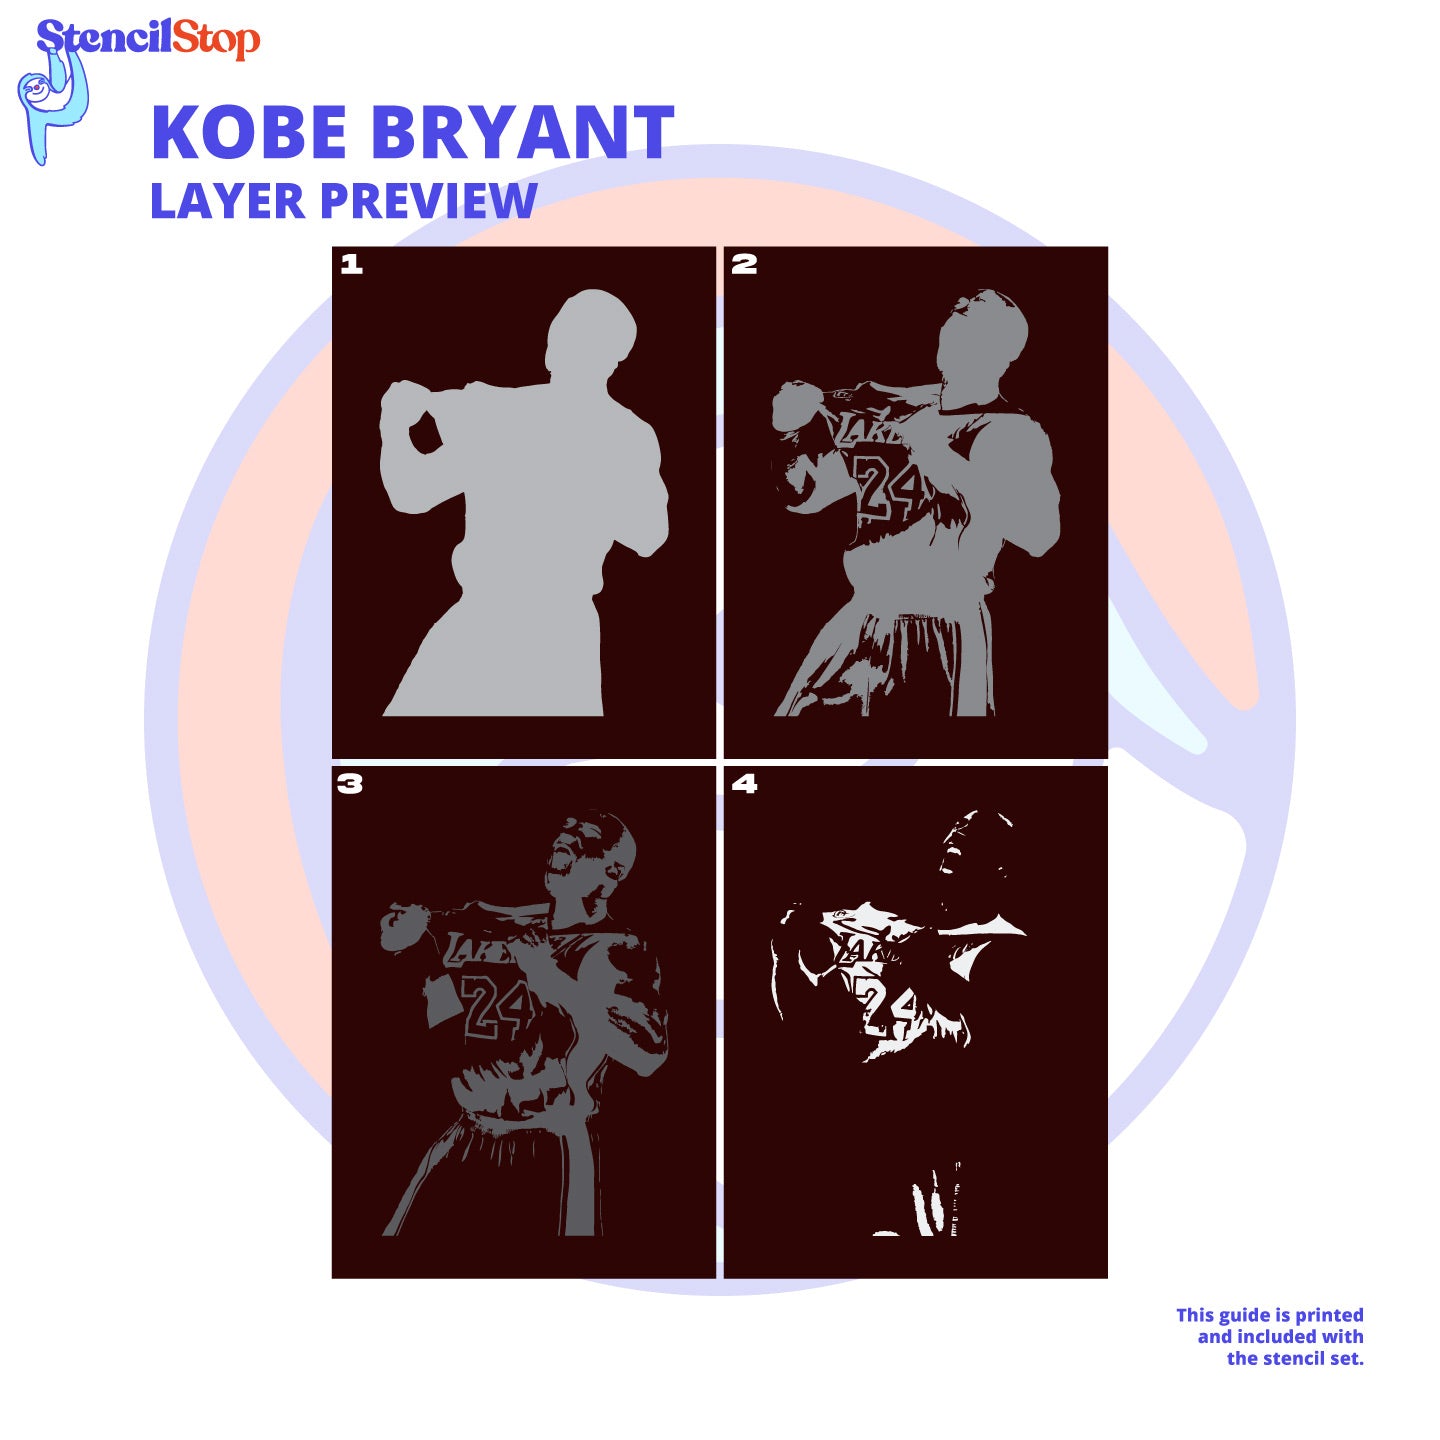 Kobe Bryant "Killer Instinct" Layered Stencil Set